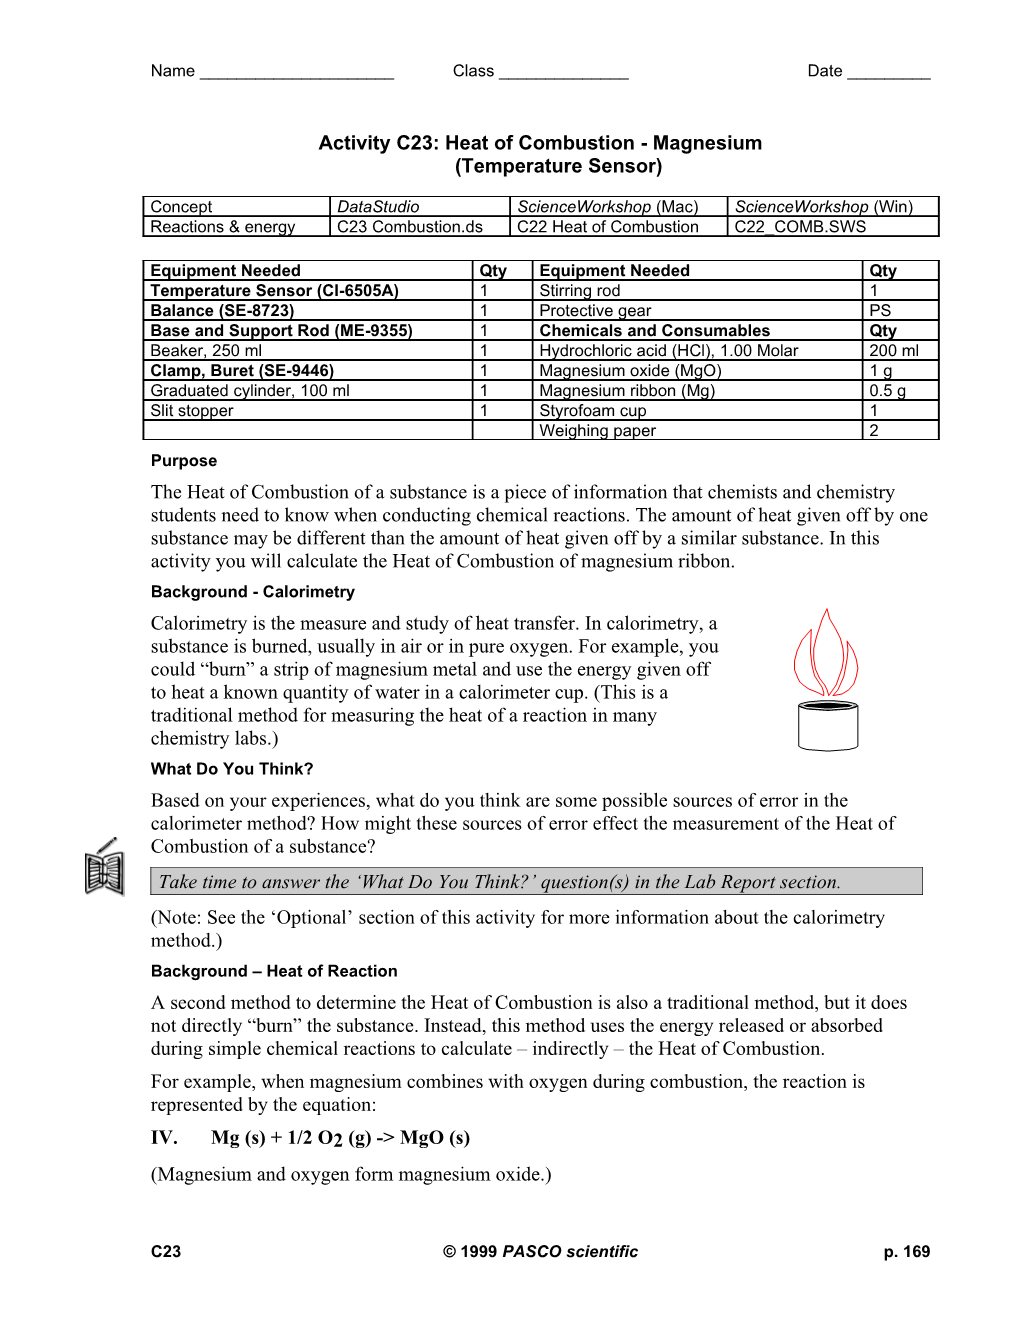 Activity C23: Heat of Combustion - Magnesium(Temperature Sensor)